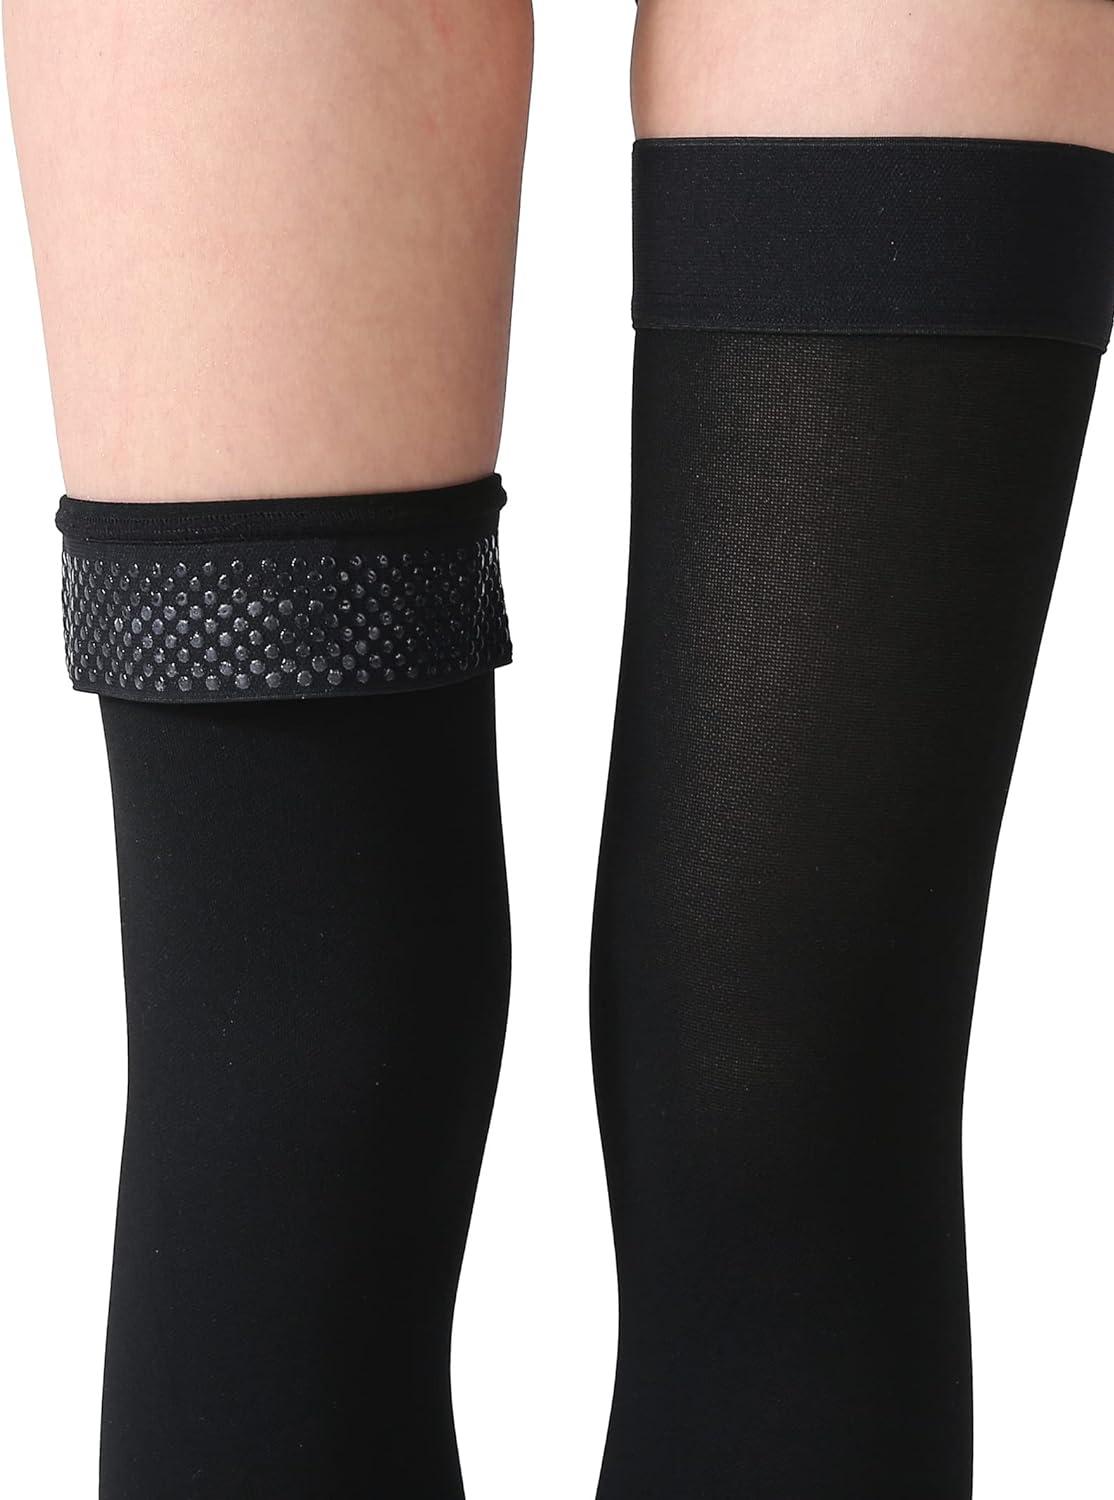 MGANG® Compression Socks, 15-20 mmHg Graduated Knee High